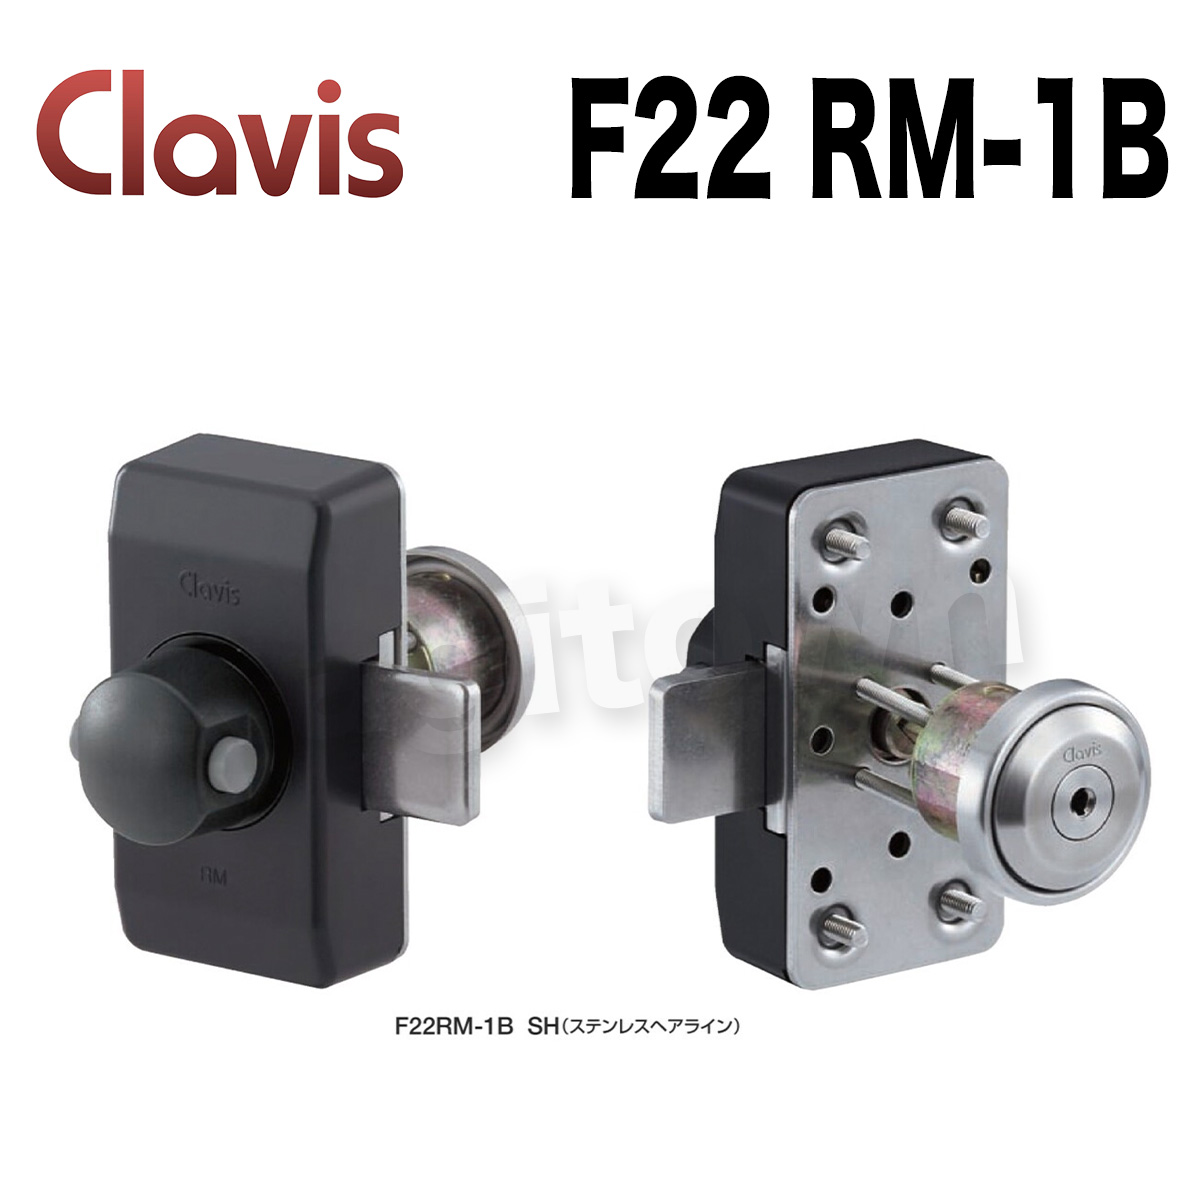 Clavis F22 RM-1B【クラビス】面付補助錠 納期3~4週間 メーカー手配品